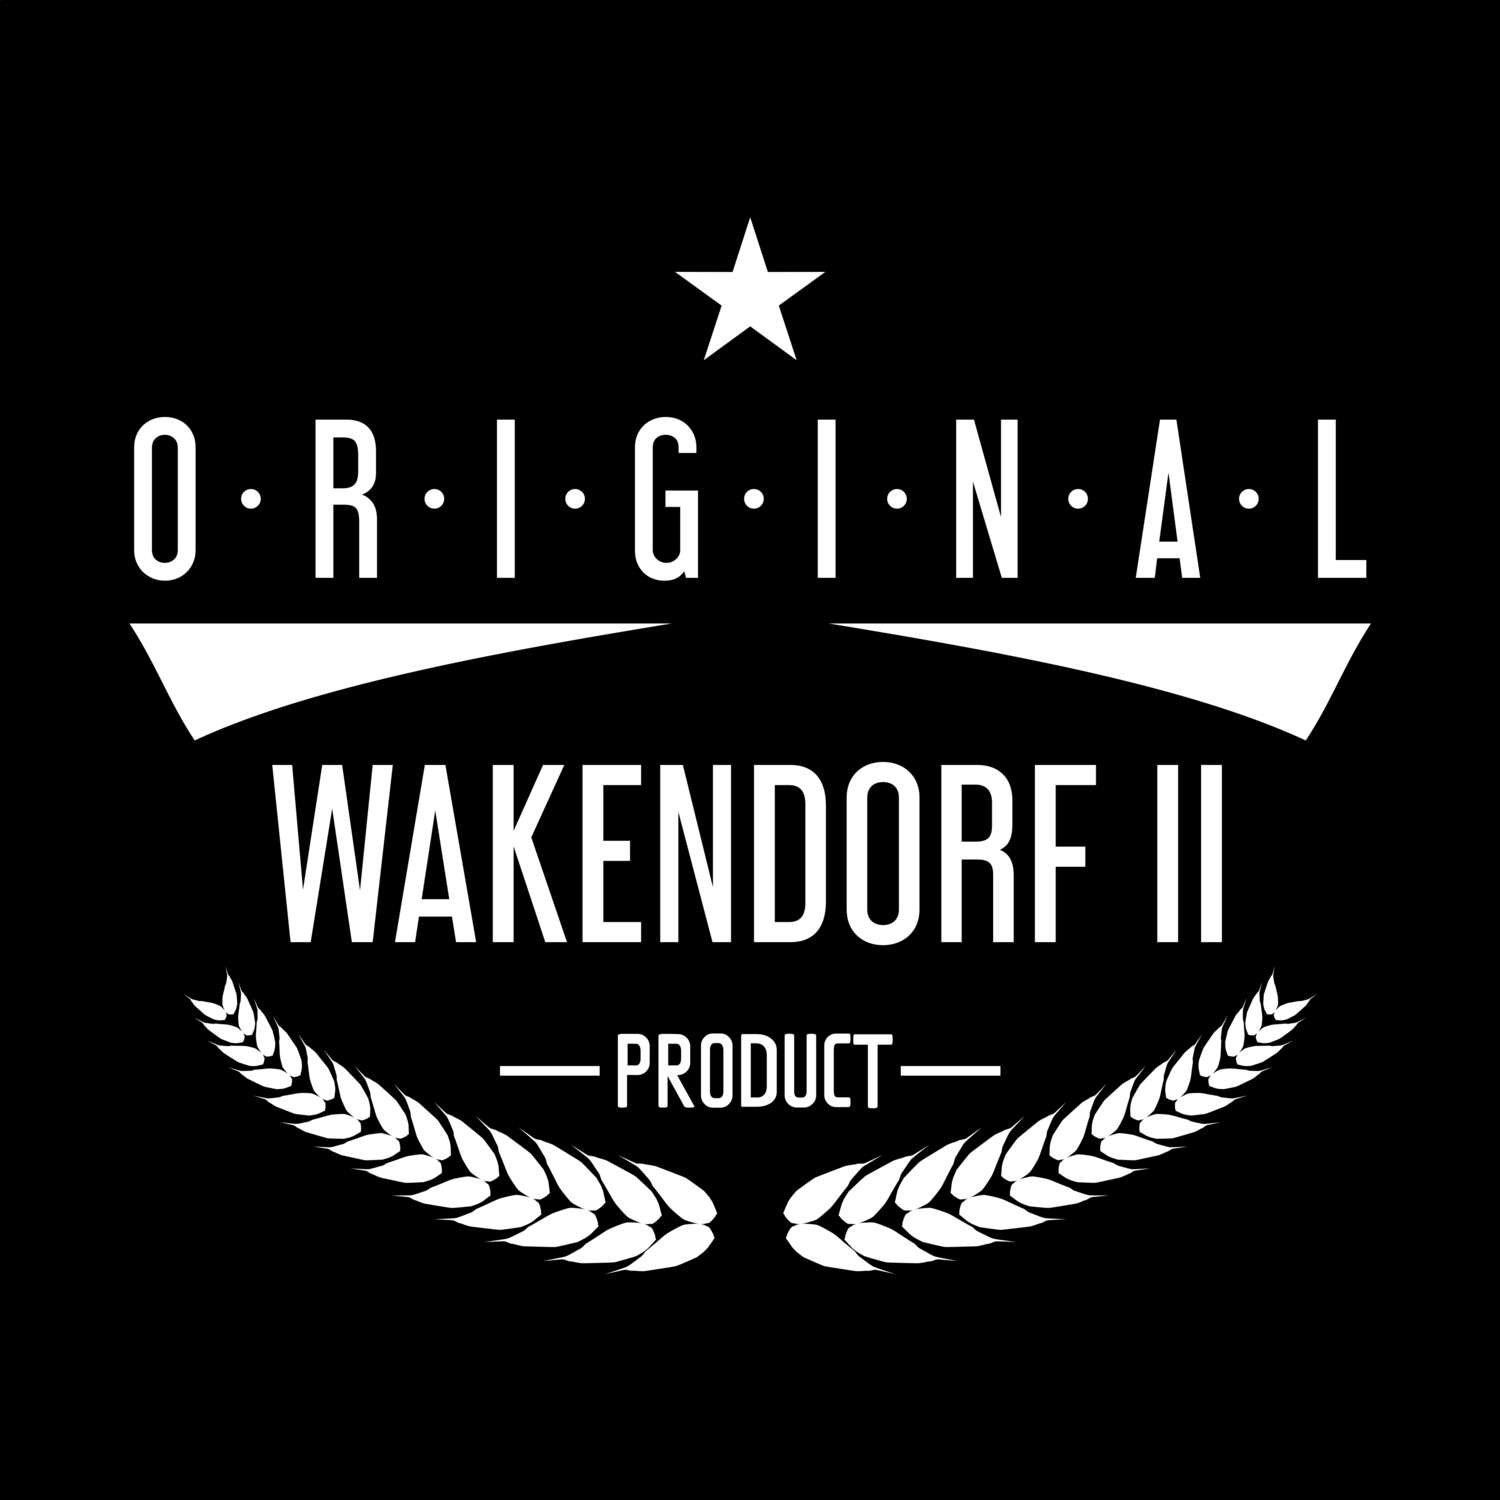 Wakendorf II T-Shirt »Original Product«